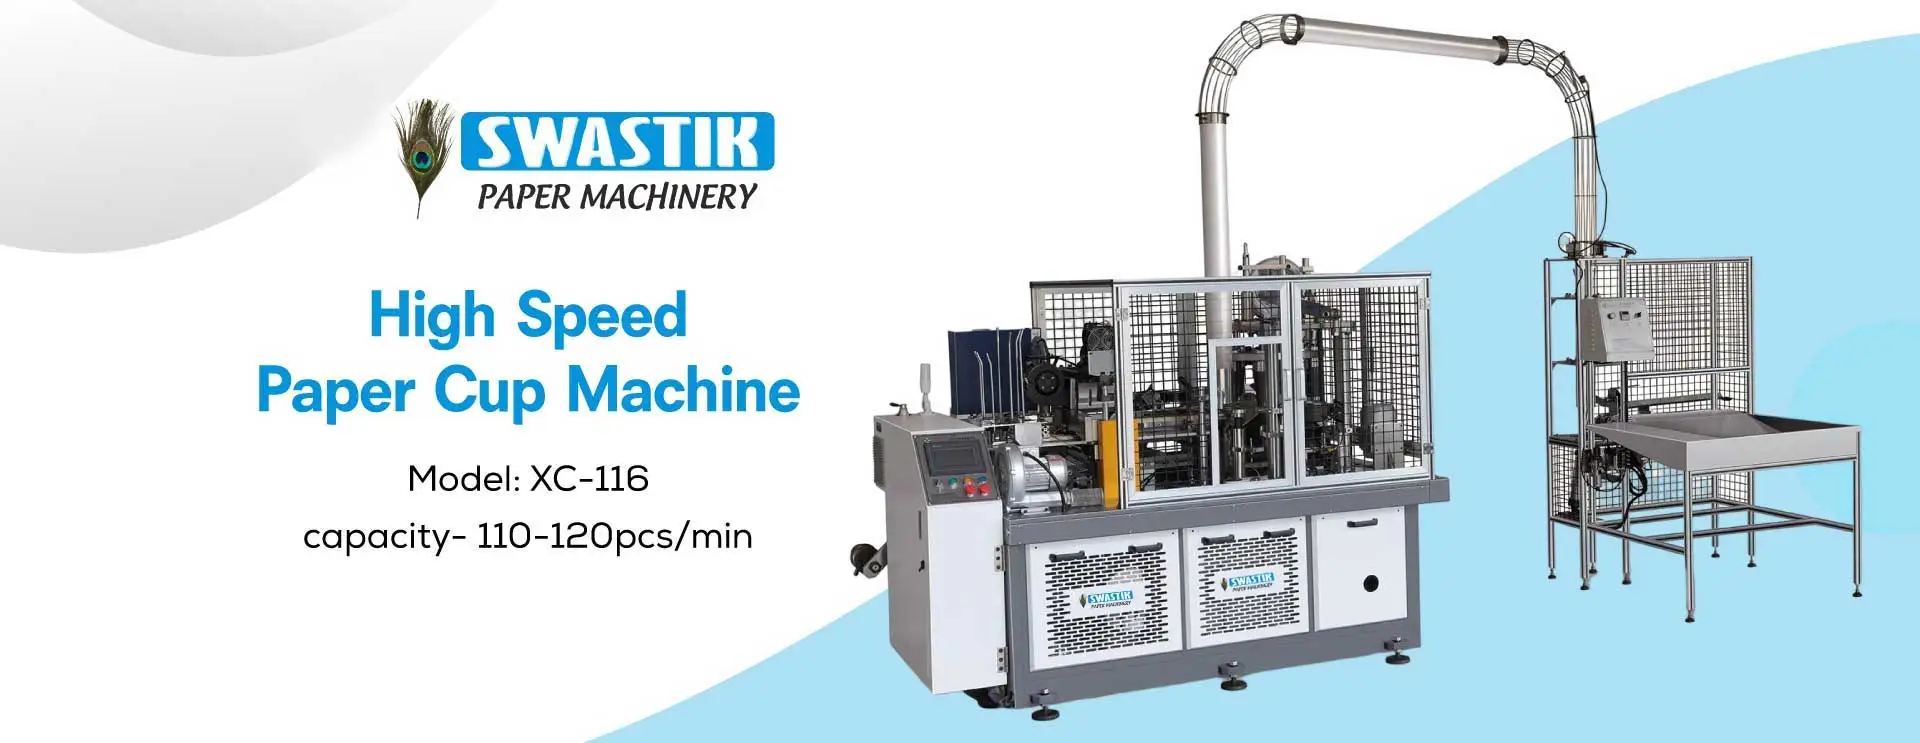 High Speed Paper Cup Machine Manufacturers in Gorakhpur